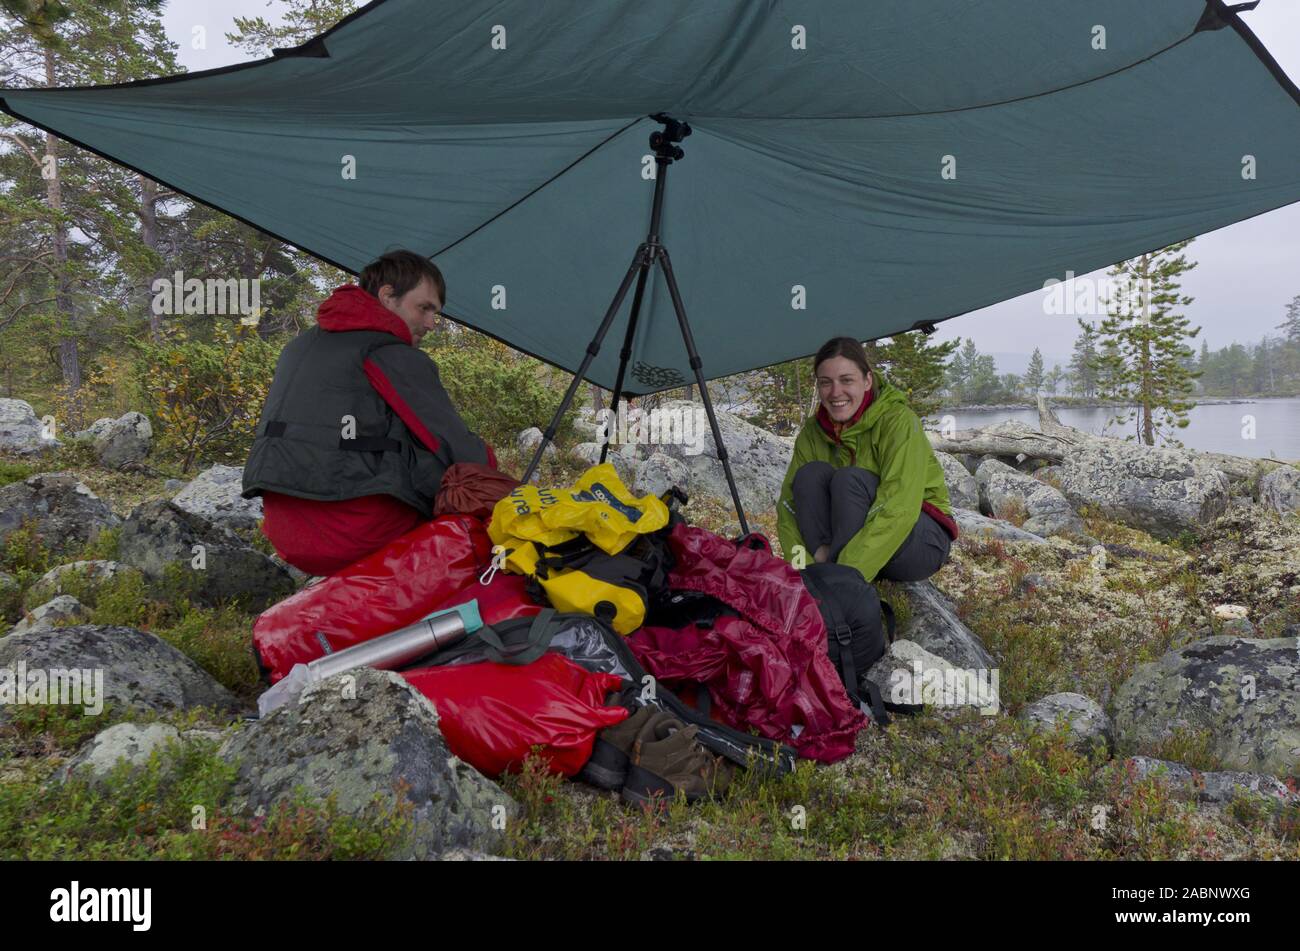 Paar sitzt im Regen unter einer Zeltplane (Tarp) am See Rogen, Naturreservat Rogen, Haerjedalen, Schweden, August 2011 Stock Photo